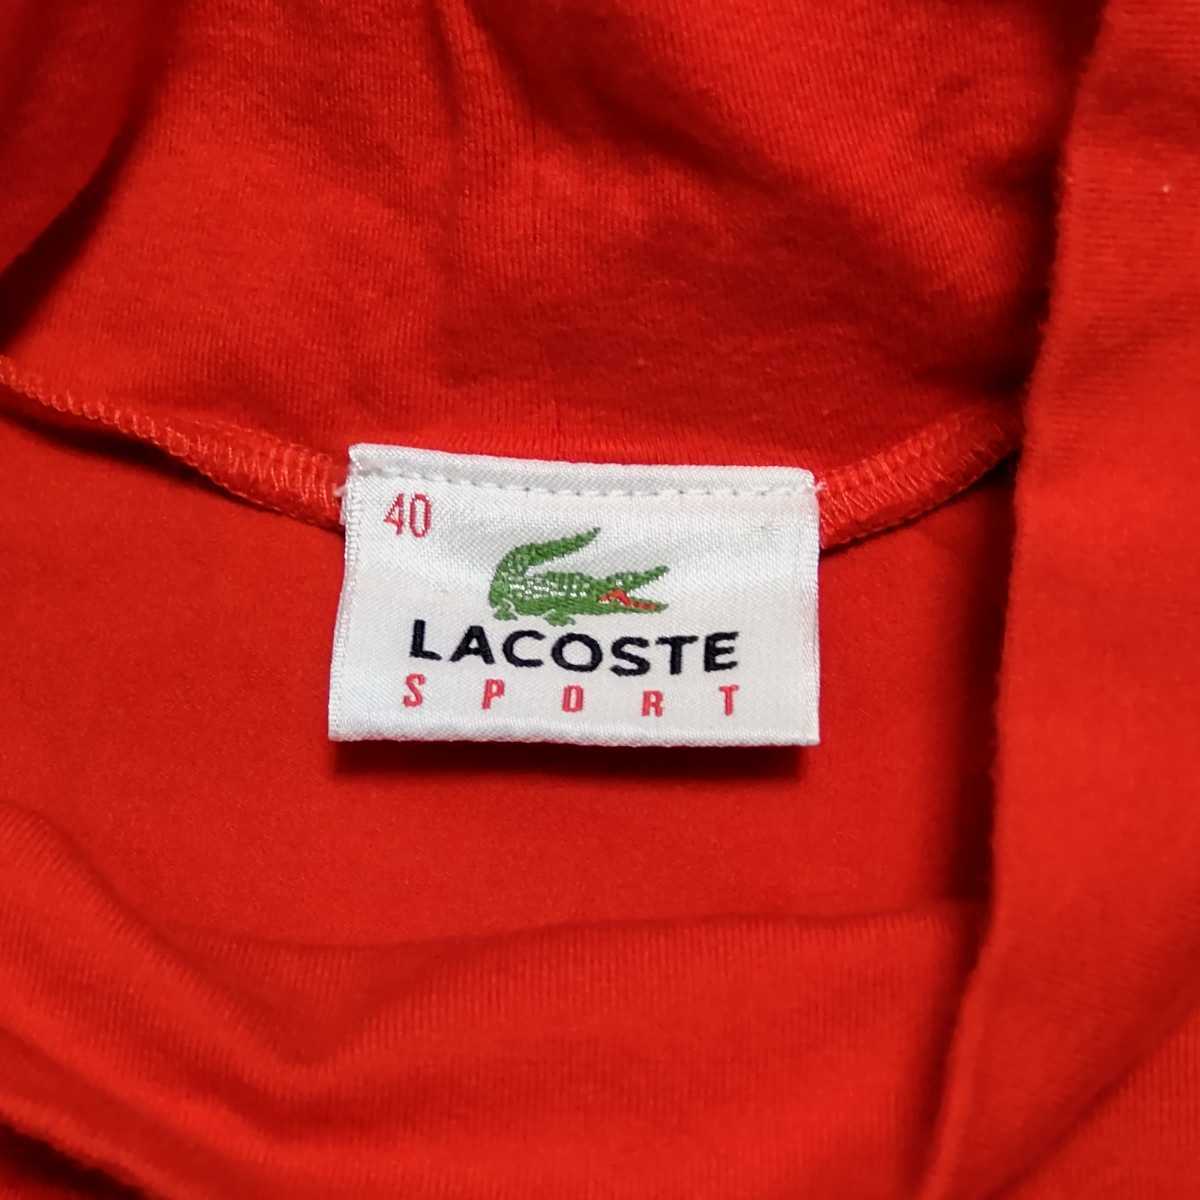 LACOSTE SPORT【良品】モックネックシャツ ゴルフ ファブリカ☆サイズ40 NR-424_画像3